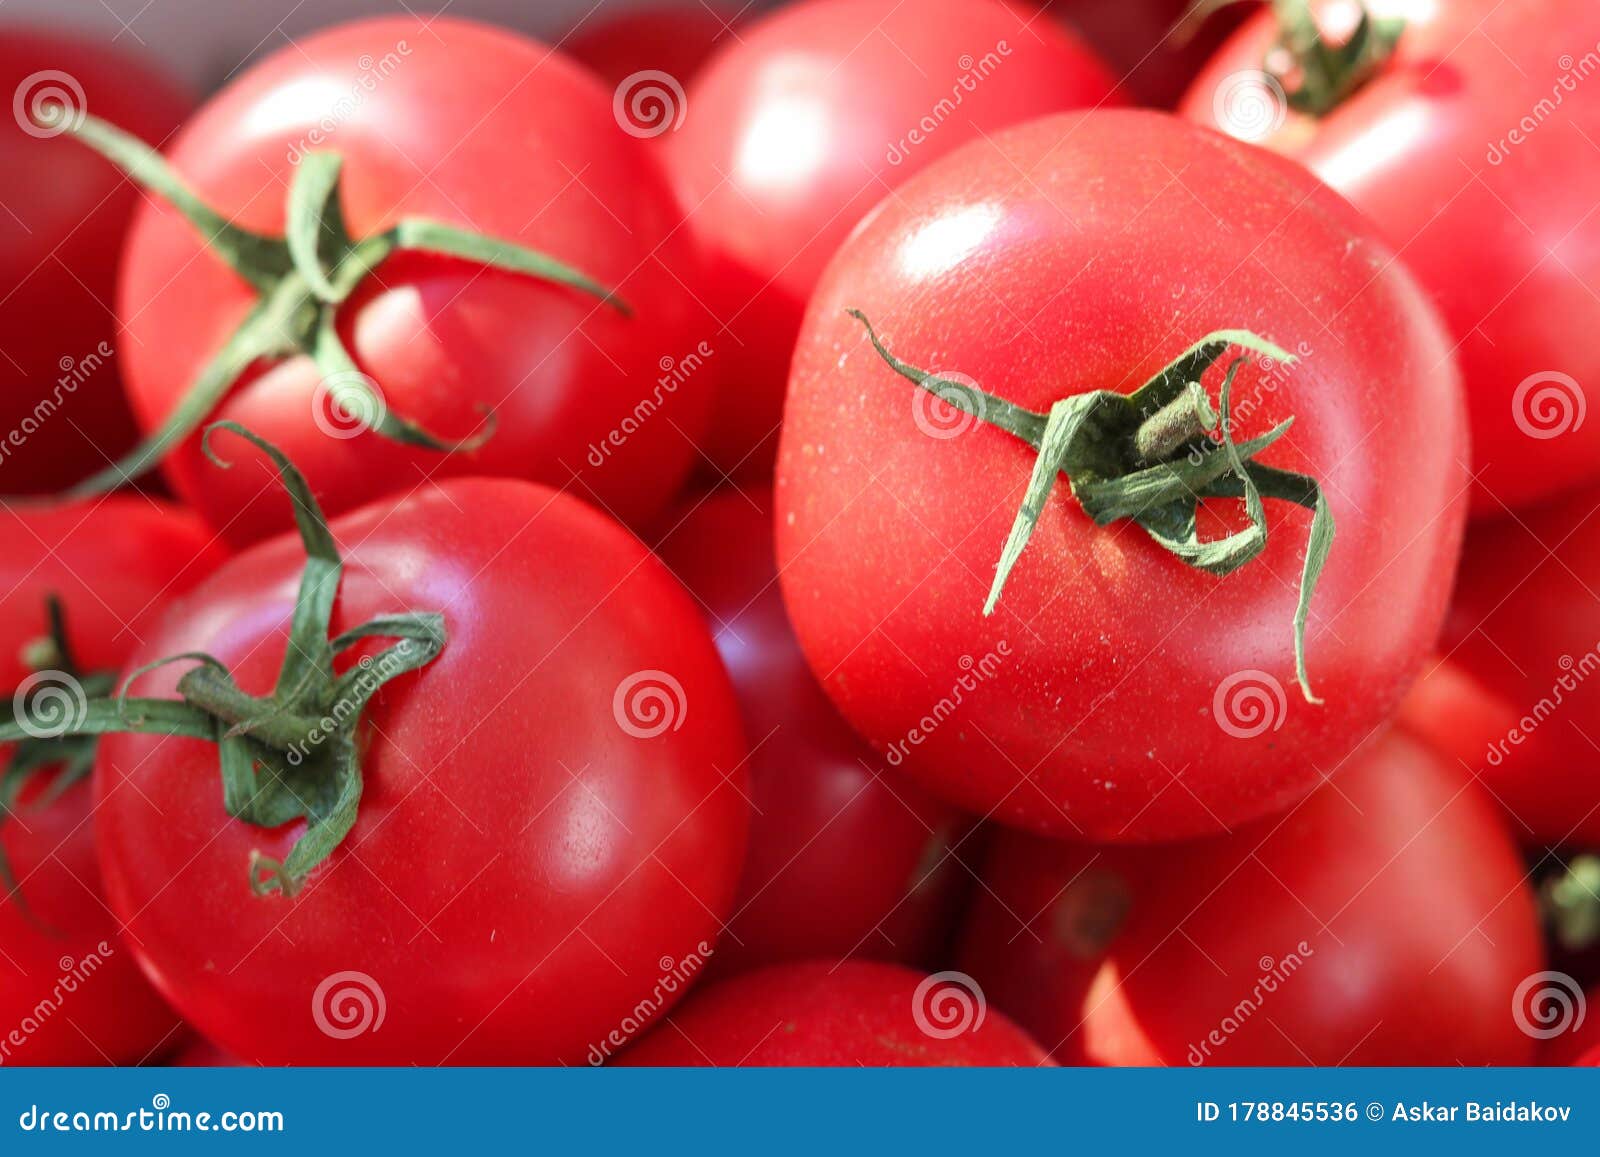 harvest of ripe tomatoes